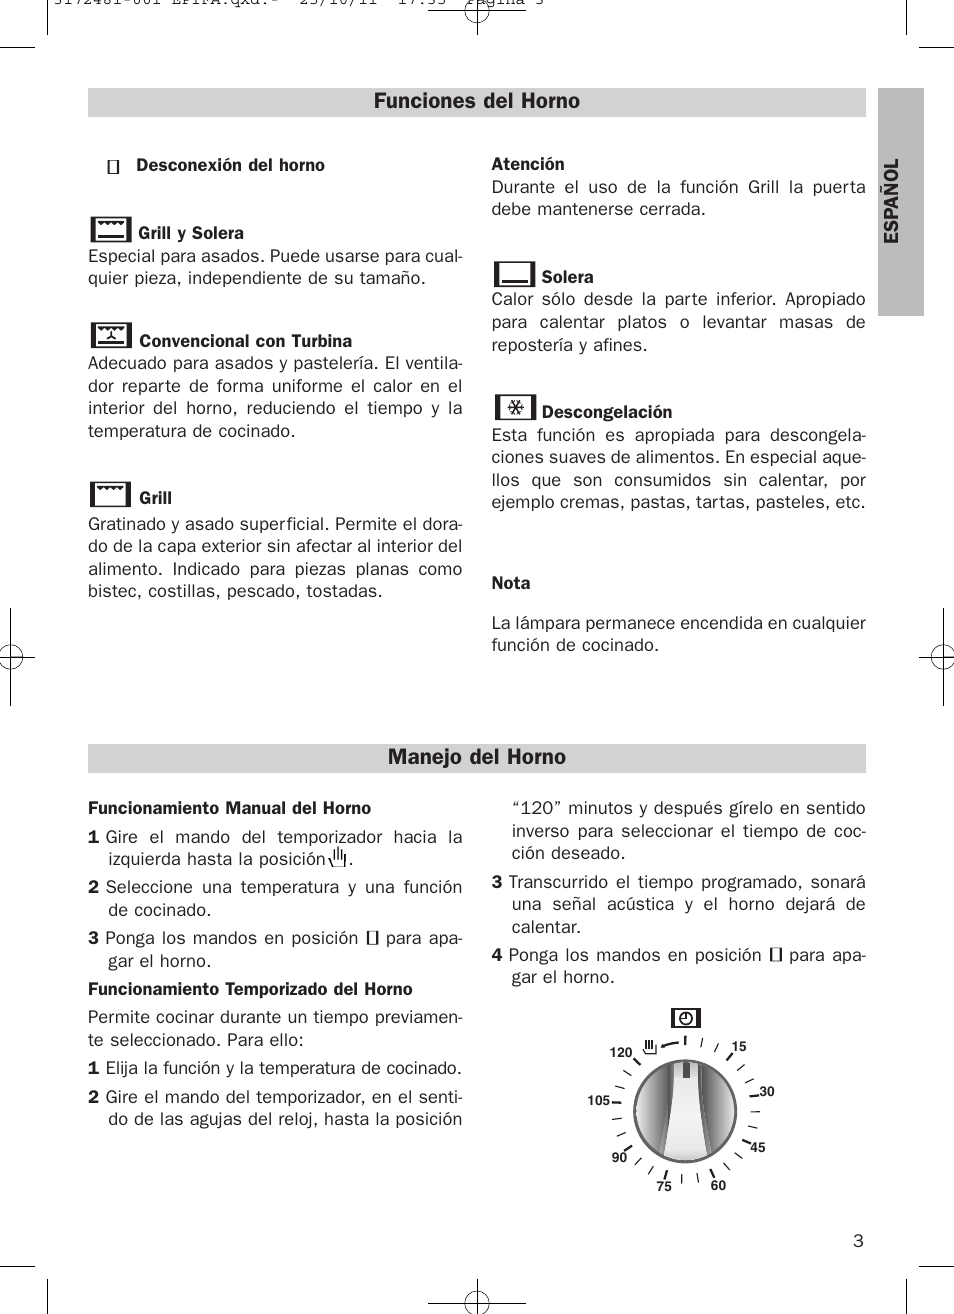 Funciones del horno, Manejo del horno | Teka HE 615 ME User Manual | Page 3  / 12 | Original mode